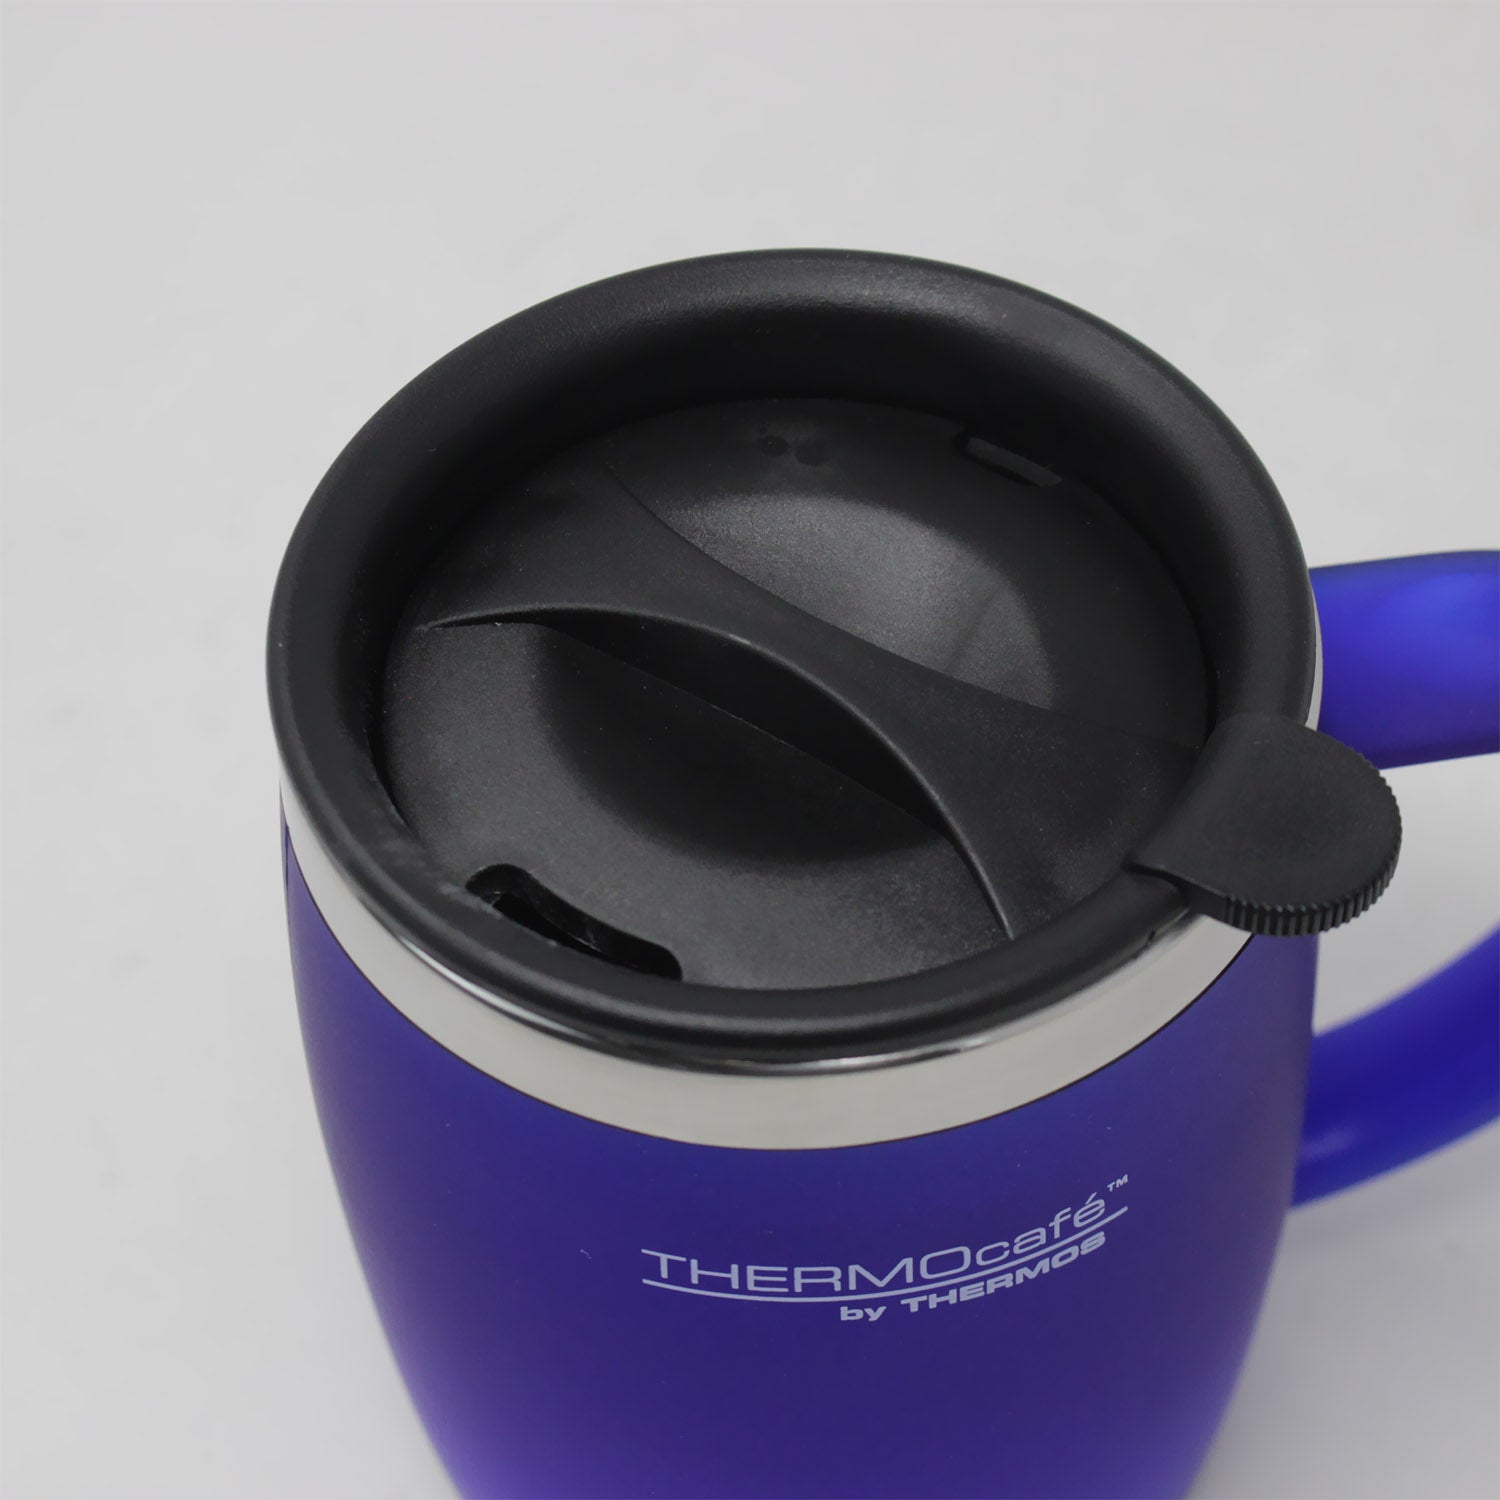 Thermocafe Soft Touch Travel Mug